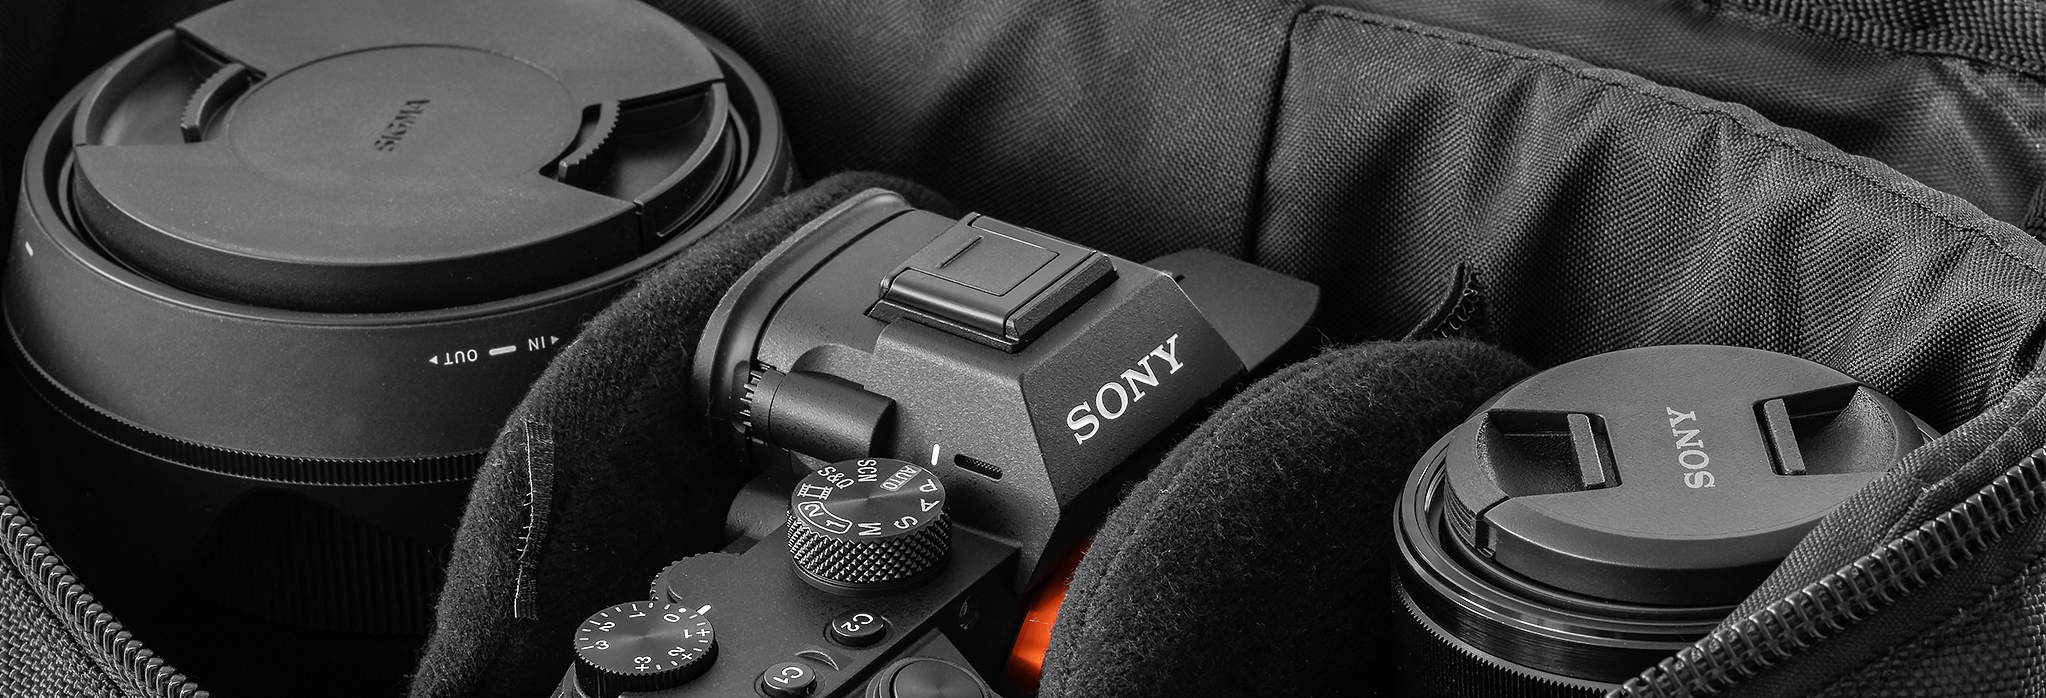 Sony-Kamera mit zwei Objektiven in der Fototasche